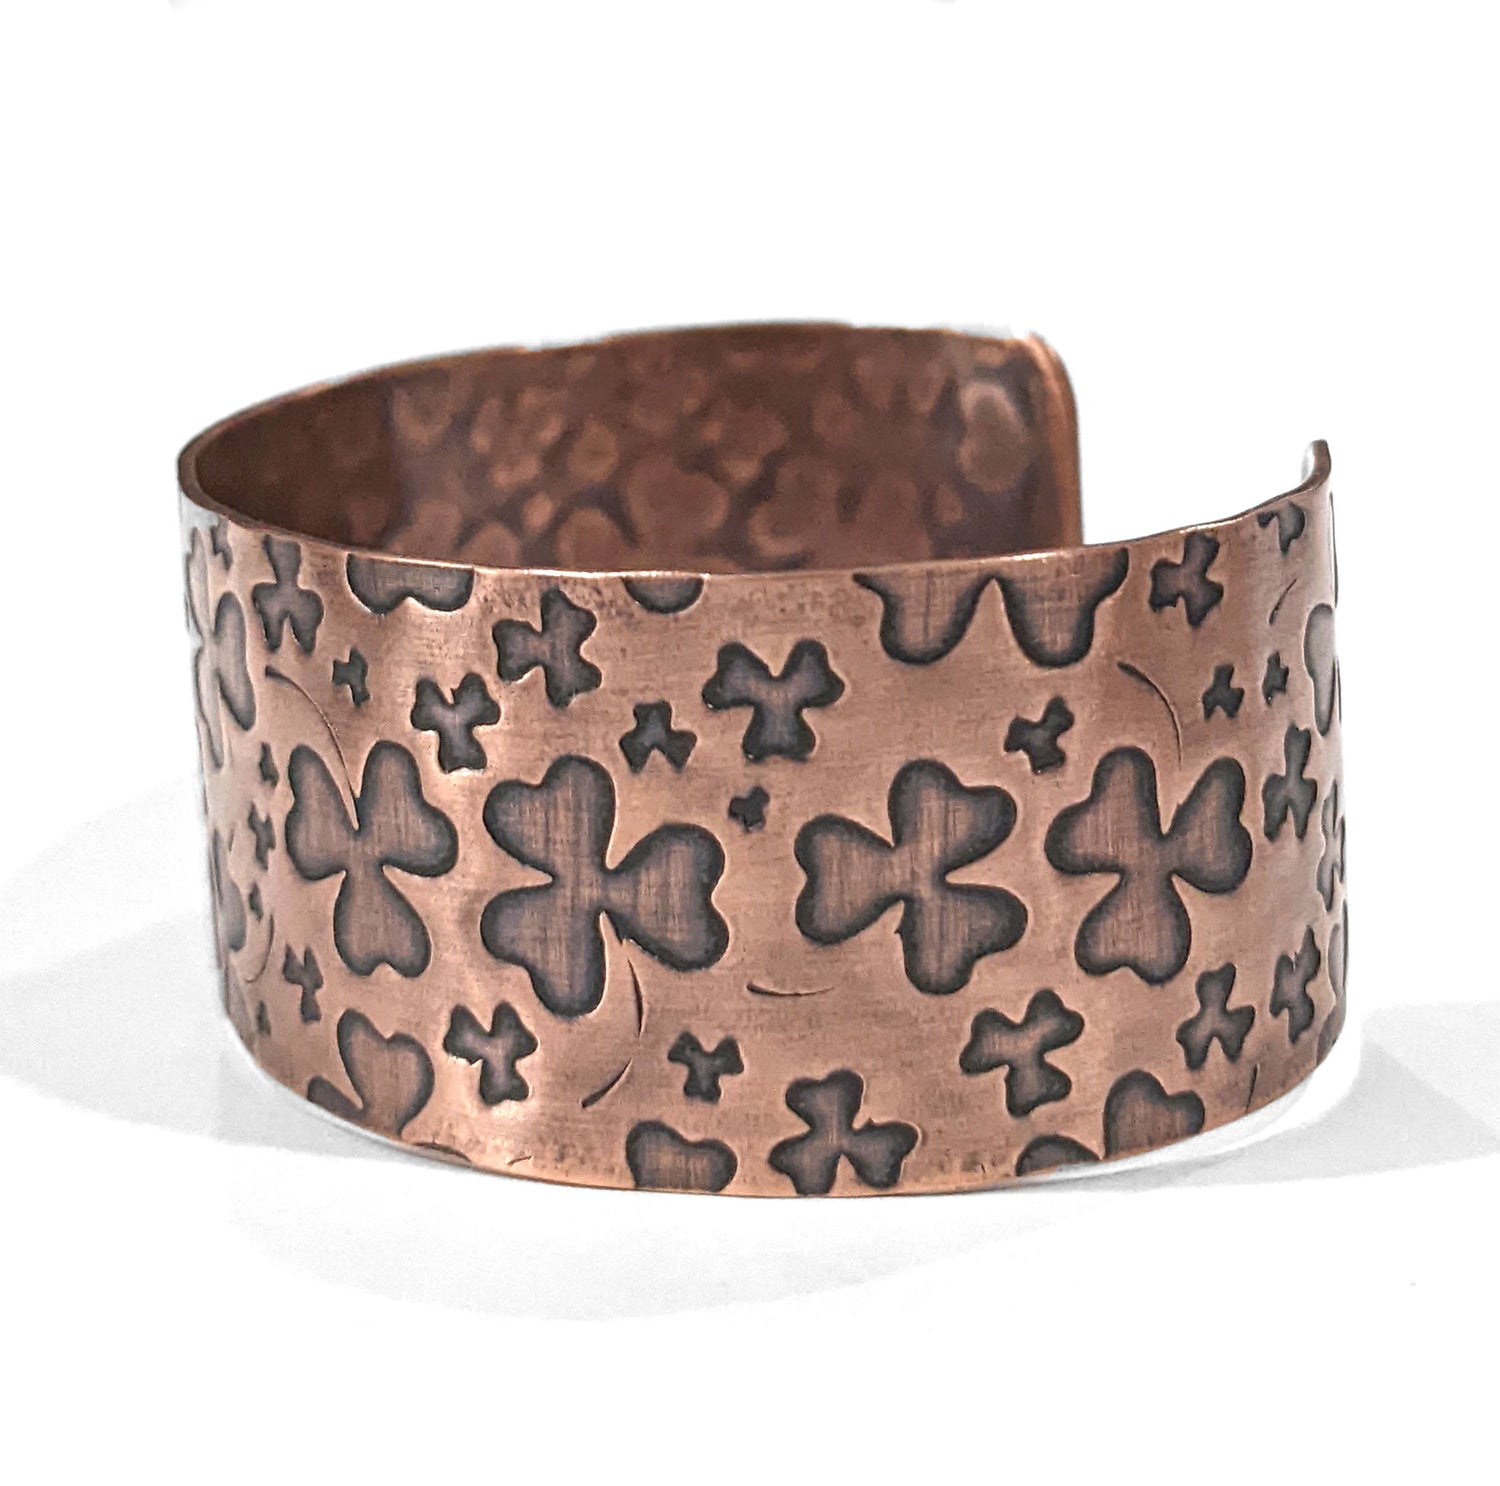 One inch wide copper cuff bracelet with impressions of shamrocks. 